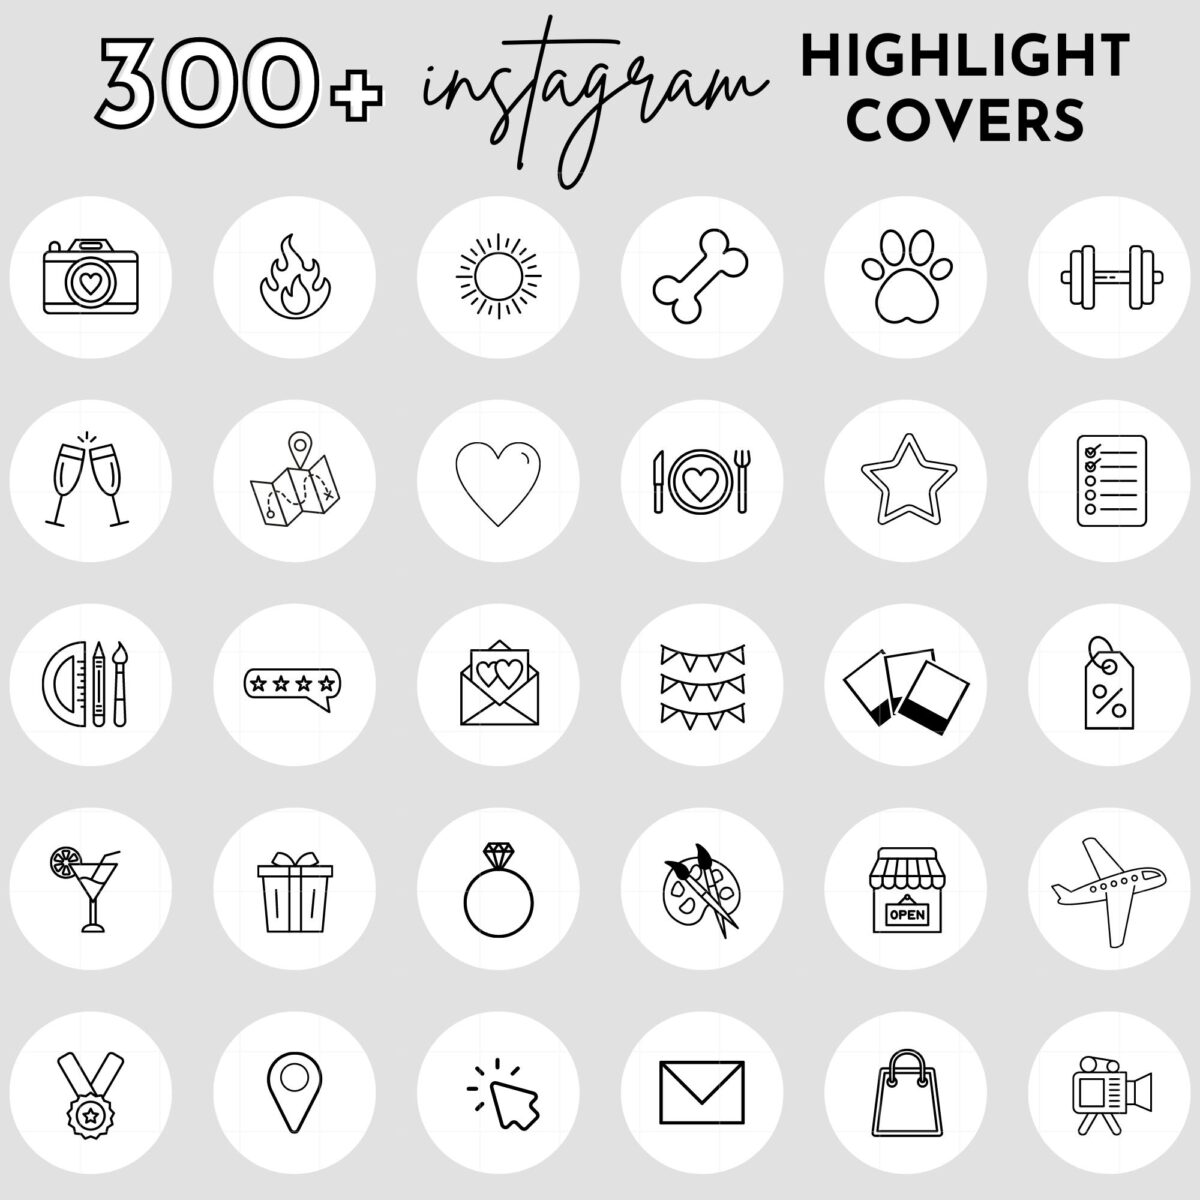 300+ White Instagram Highlight Cover Icons - Samantha Anne Creative